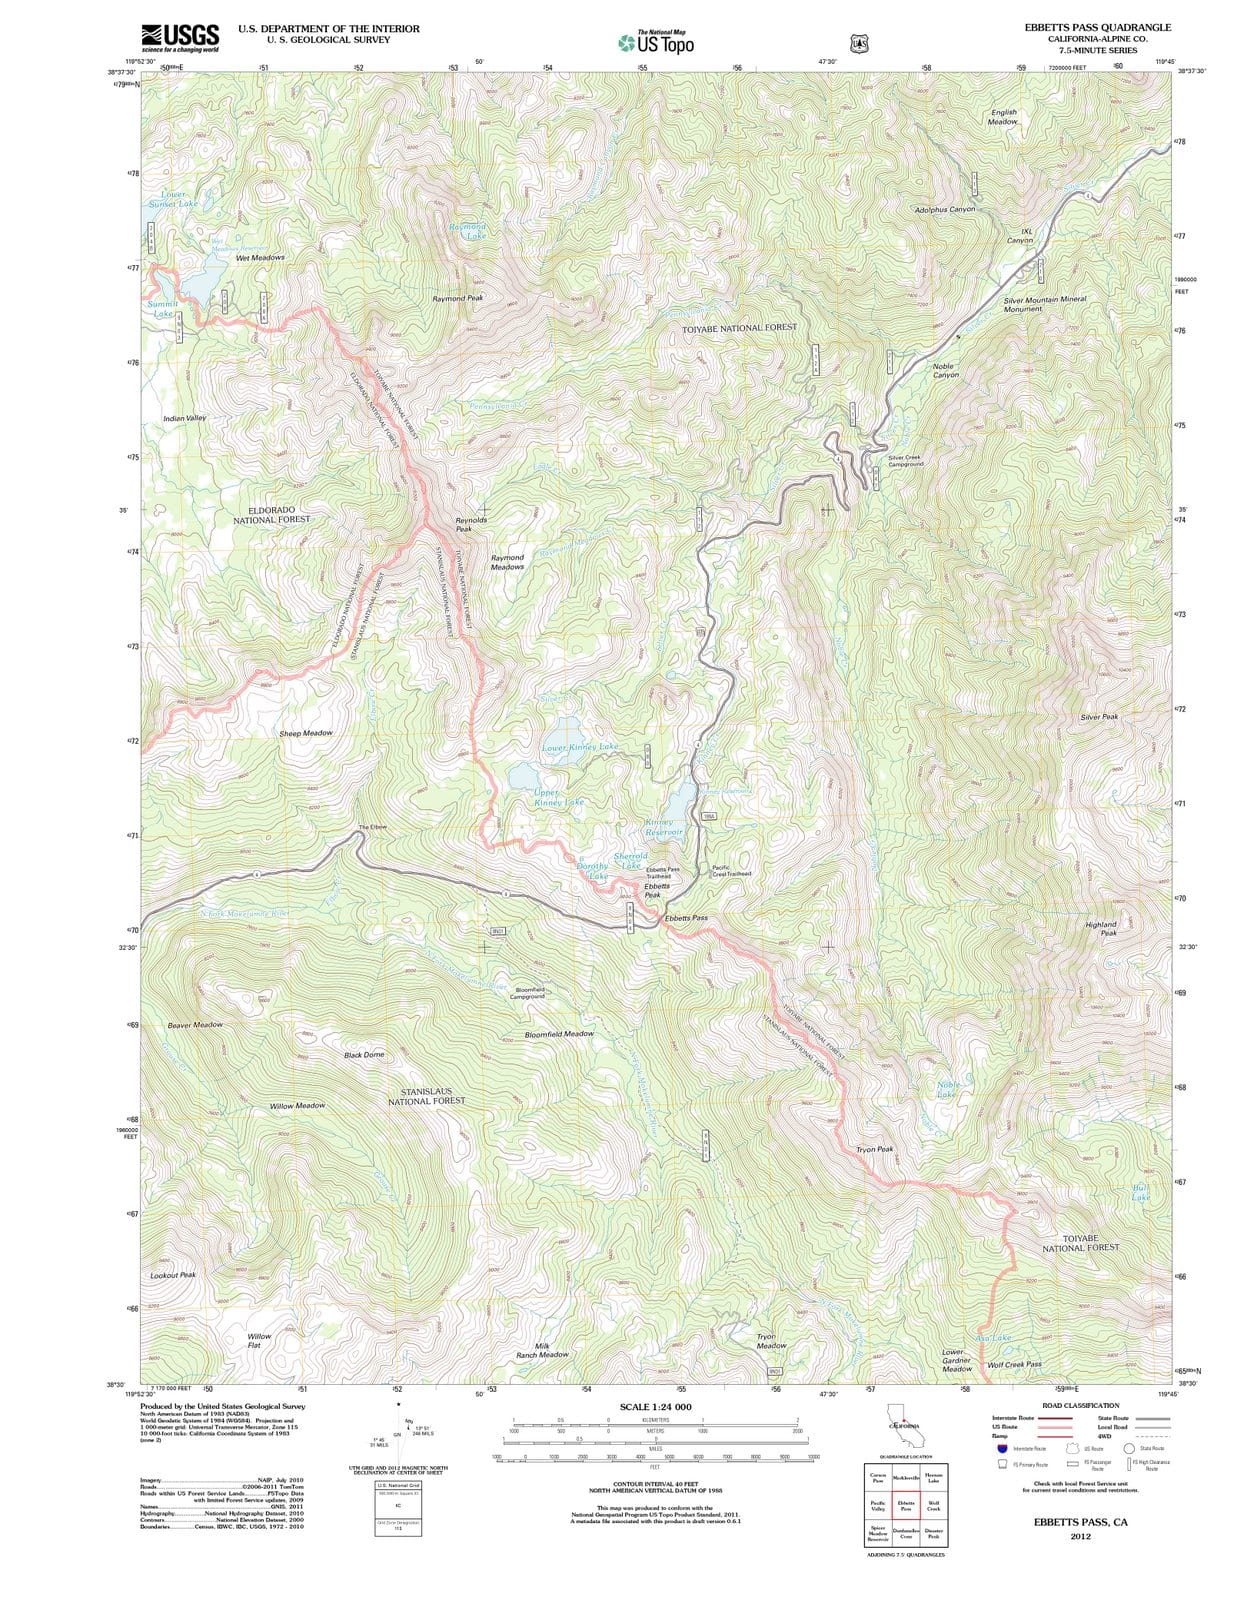 2012 Ebbetts Pass, CA - California - USGS Topographic Map